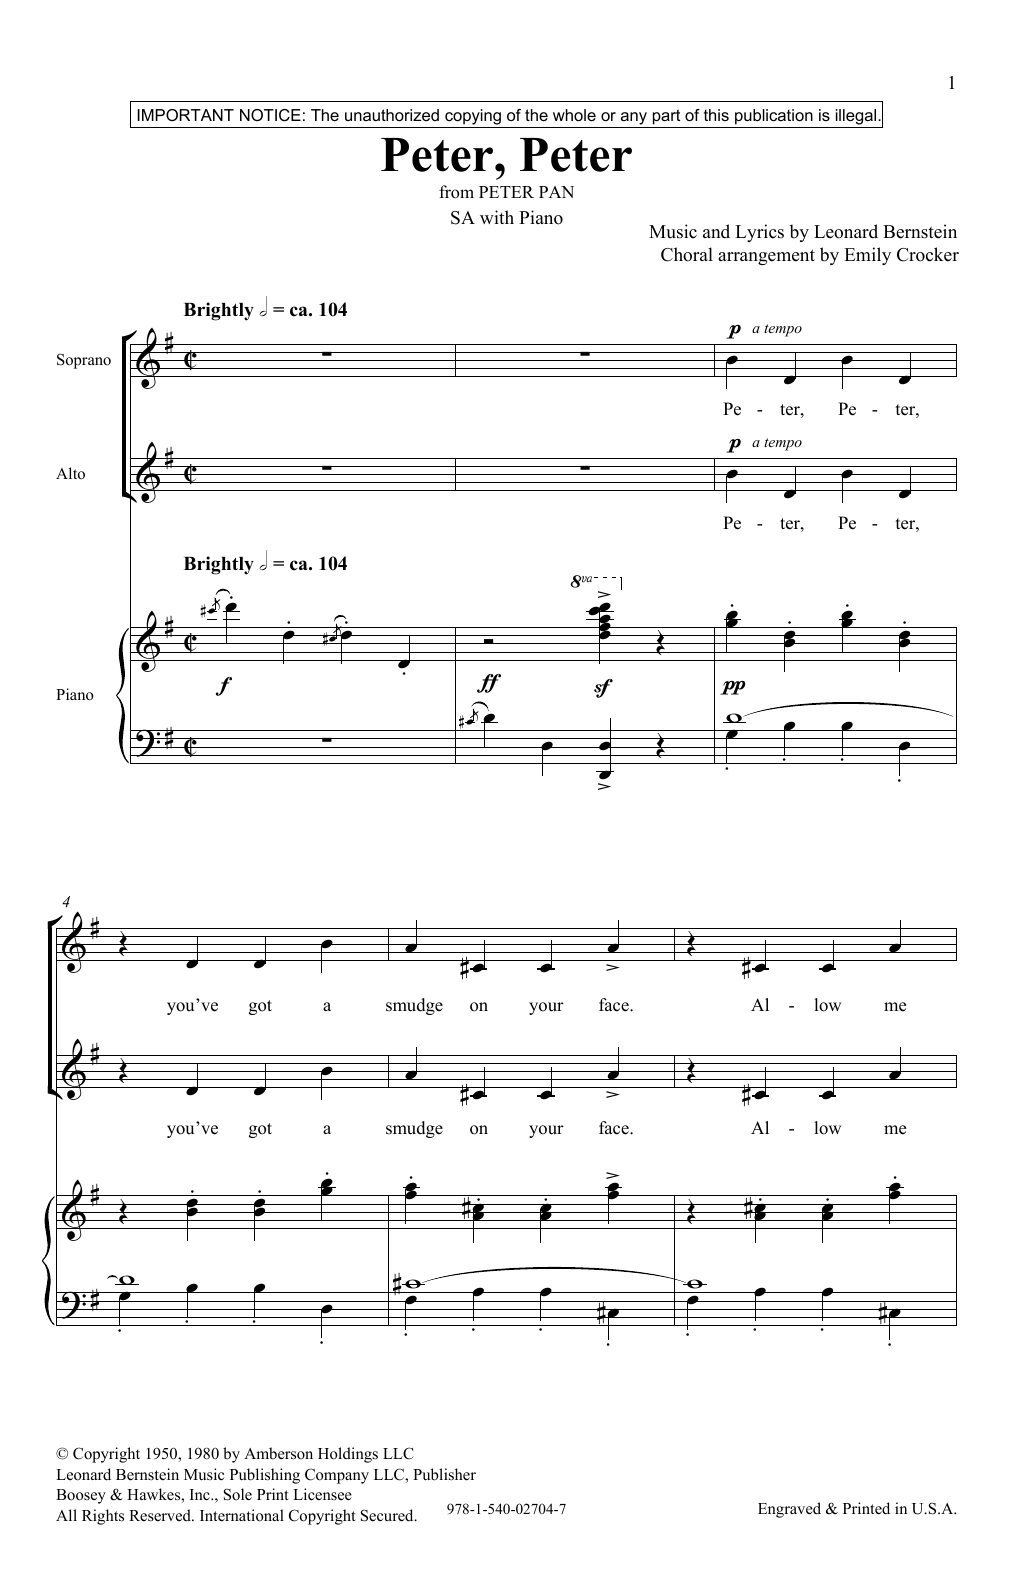 Leonard Bernstein Peter, Peter (from Peter Pan Suite) (arr. Emily Crocker) Sheet Music Notes & Chords for Choir - Download or Print PDF